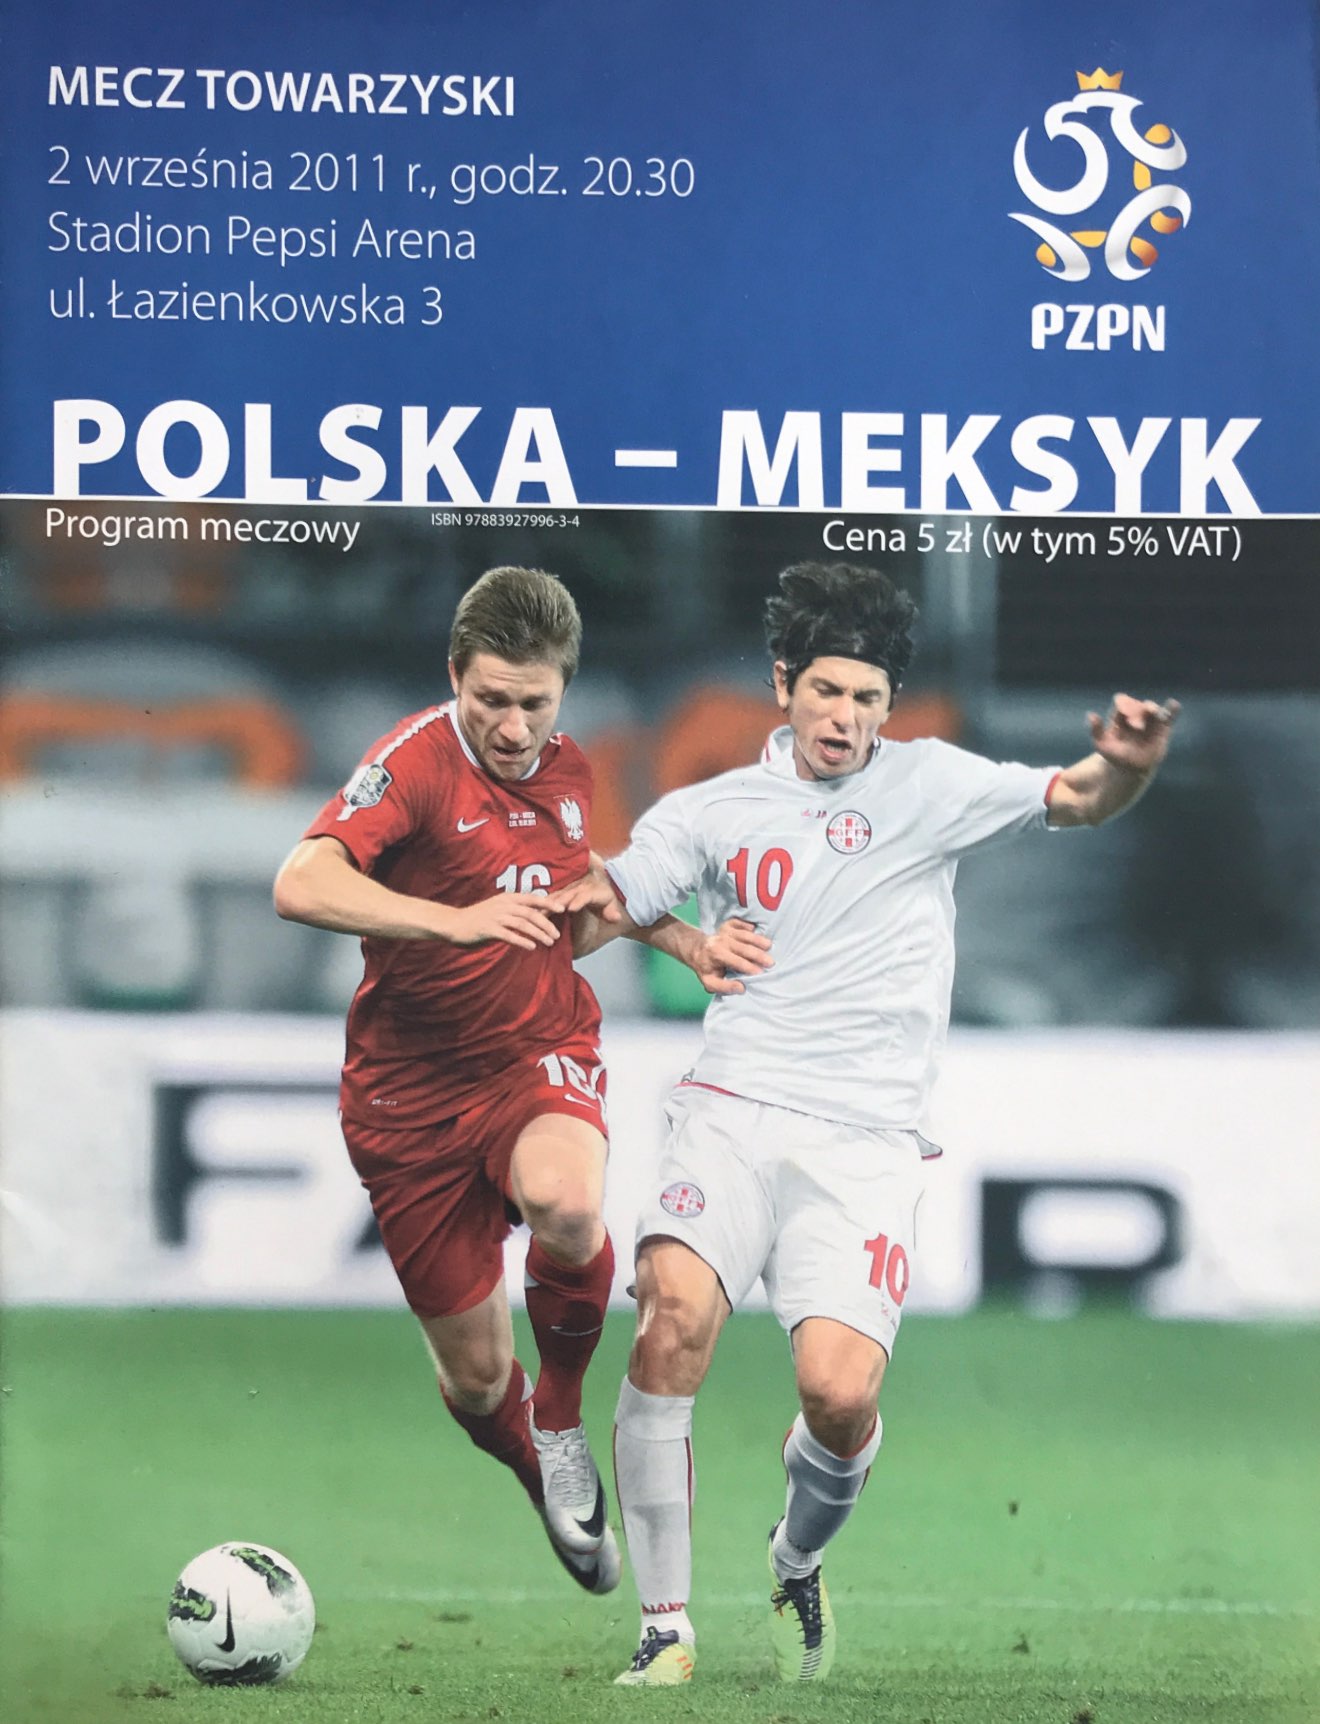 Program meczowy Polska - Meksyk 1:1 (02.09.2011).